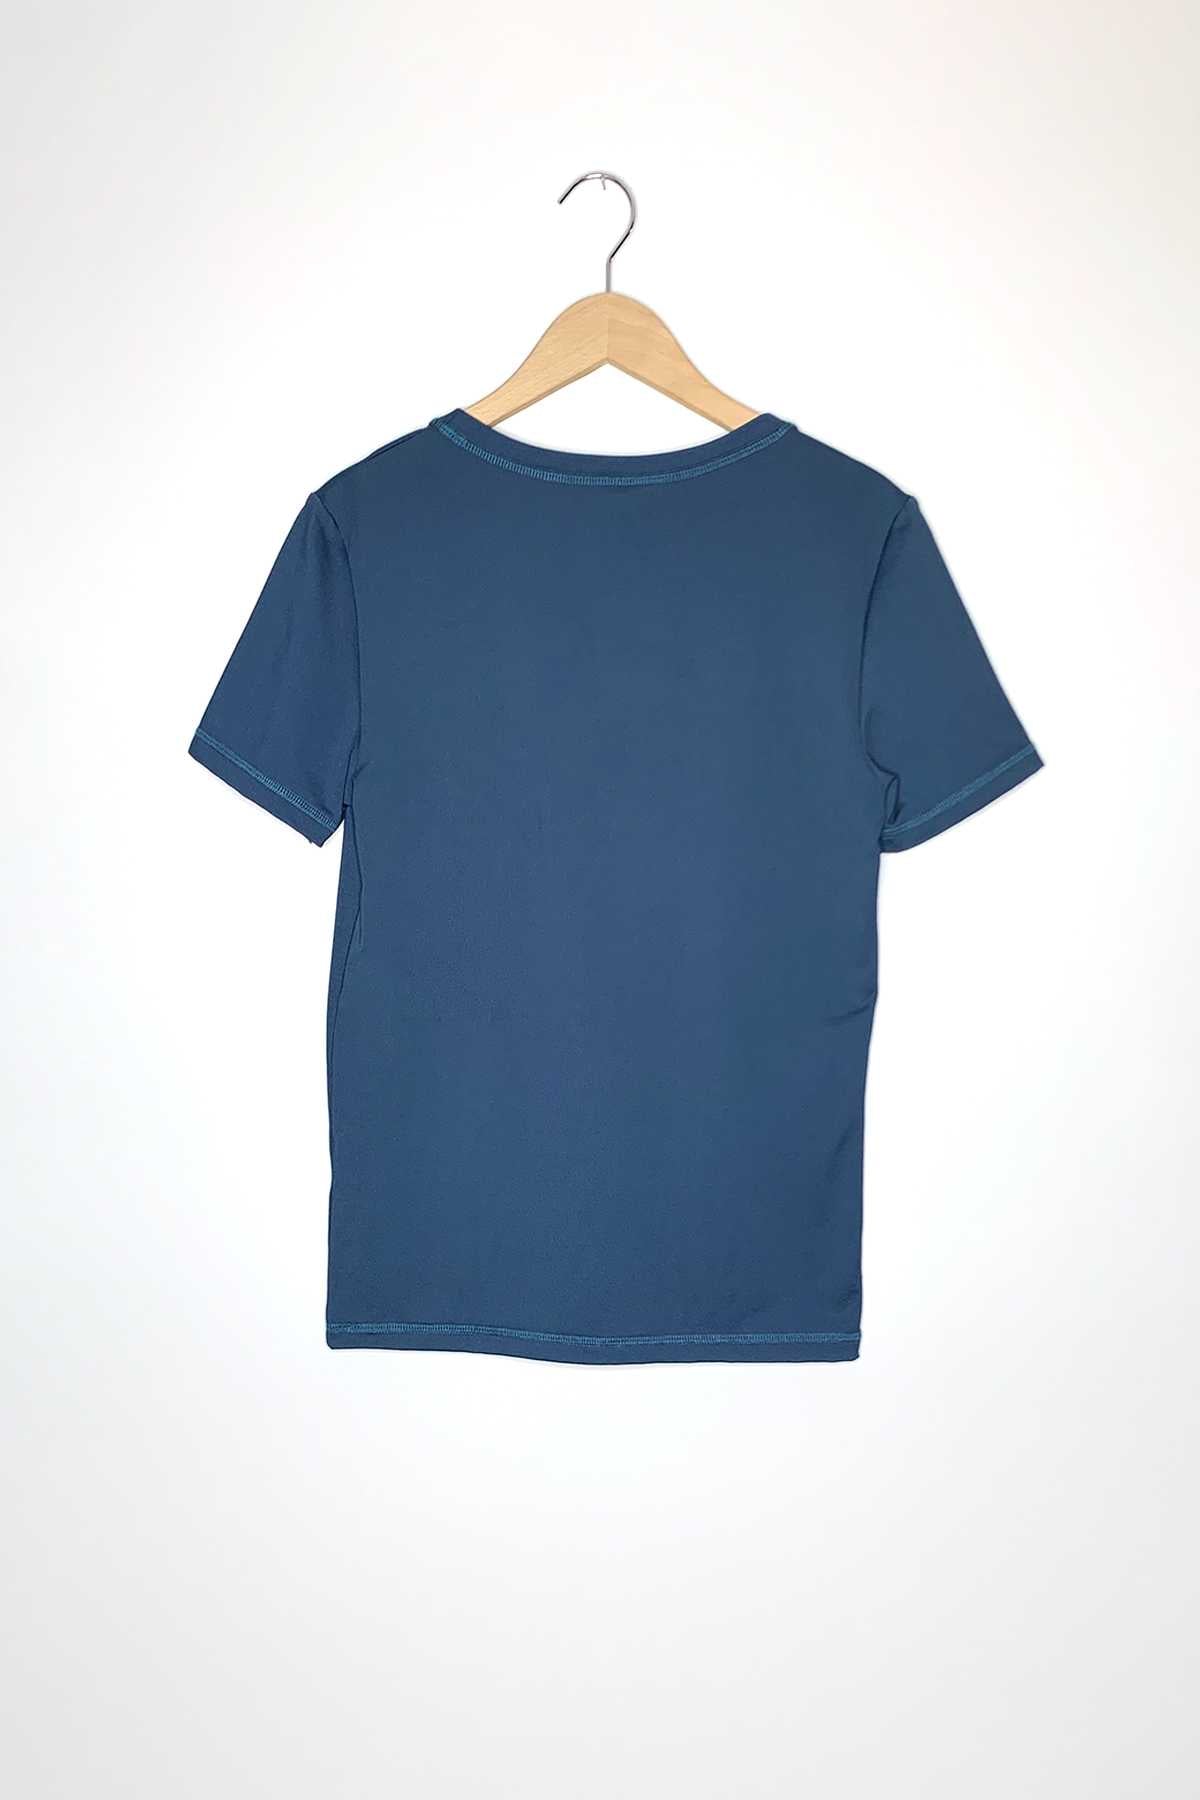 346 - YUJ X DAMART men's thermolactyl t-shirt // Size S – YUJ Paris Store